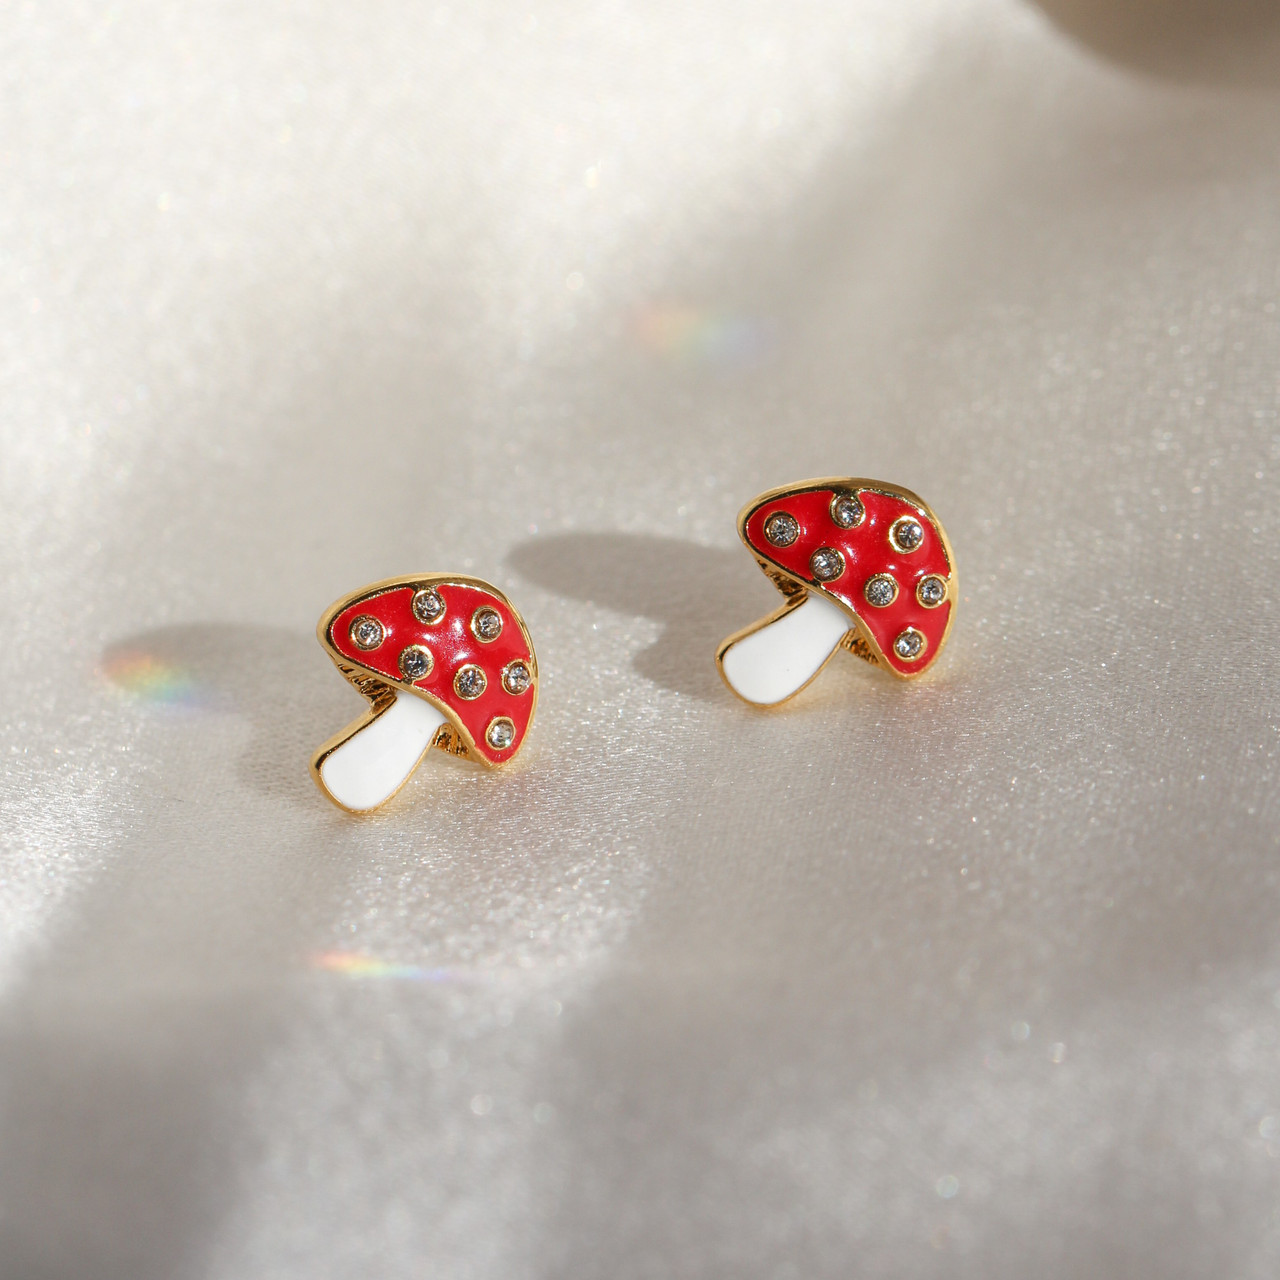 Spotty Mushroom Ear Studs Cute Mushroom Earrings Adorable Woodland Jewellery Red Toadstool Wooden Studs